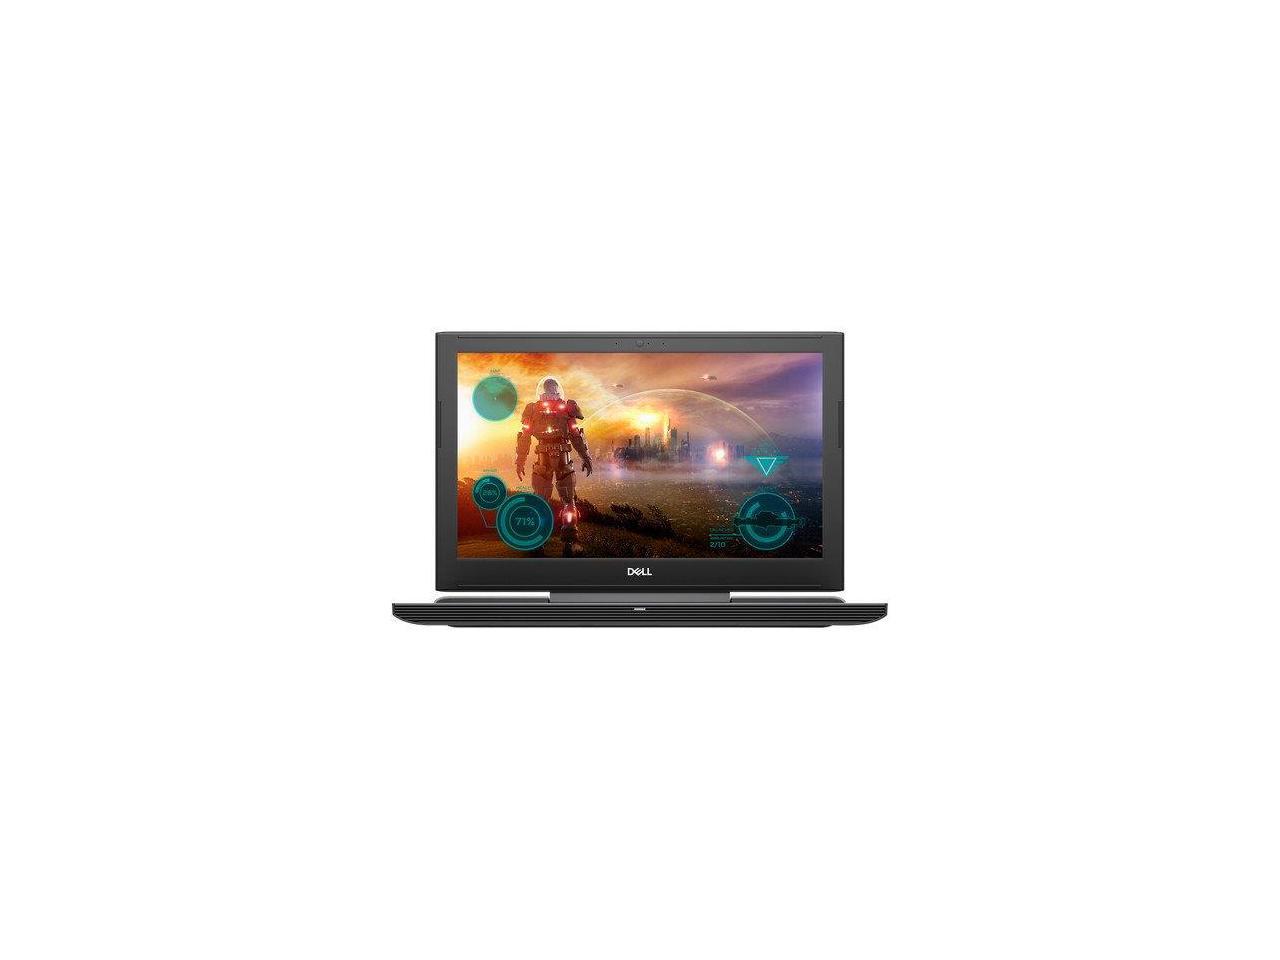 Dell Inspiron 7000 15.6" IPS FHD Gaming Laptop | VR Ready | Intel Quad Core i5-7300HQ | 24GB RAM 128GB SSD 500GB HDD | NVIDIA GeForce GTX 1060 6GB GDDR5 | Windows 10 Black